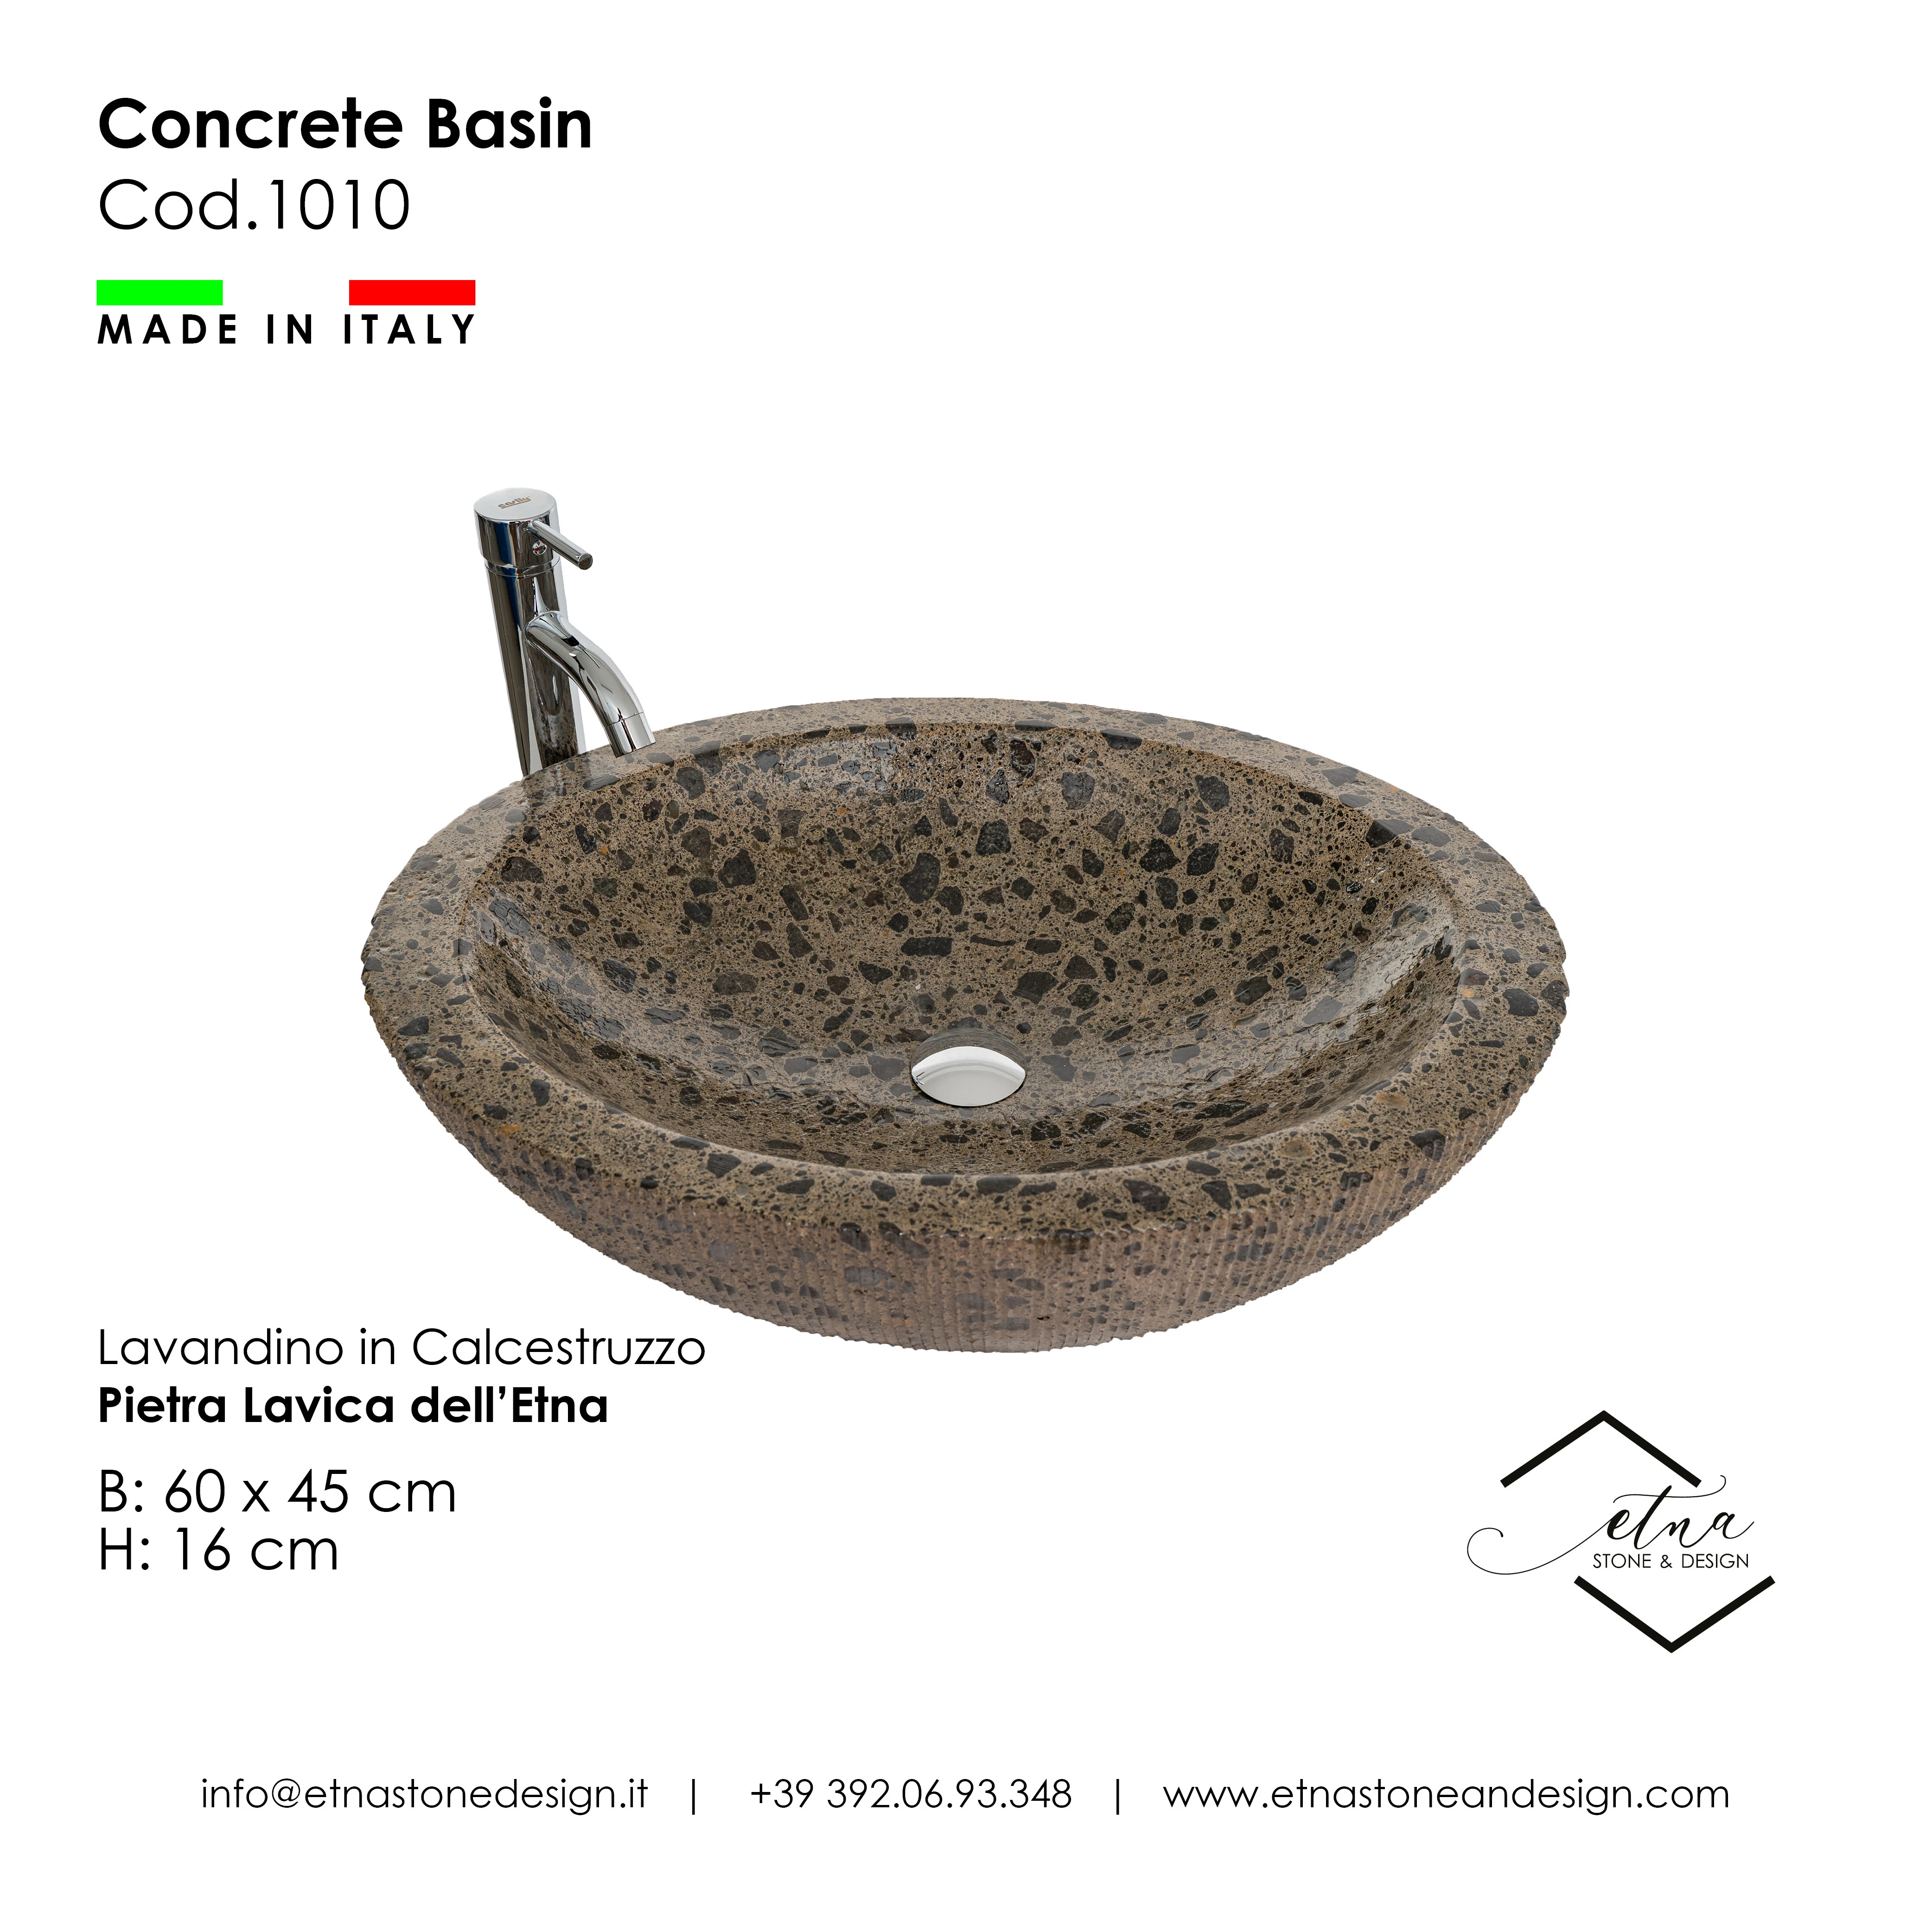 Etna Stone & Design Concrete Basin Sink